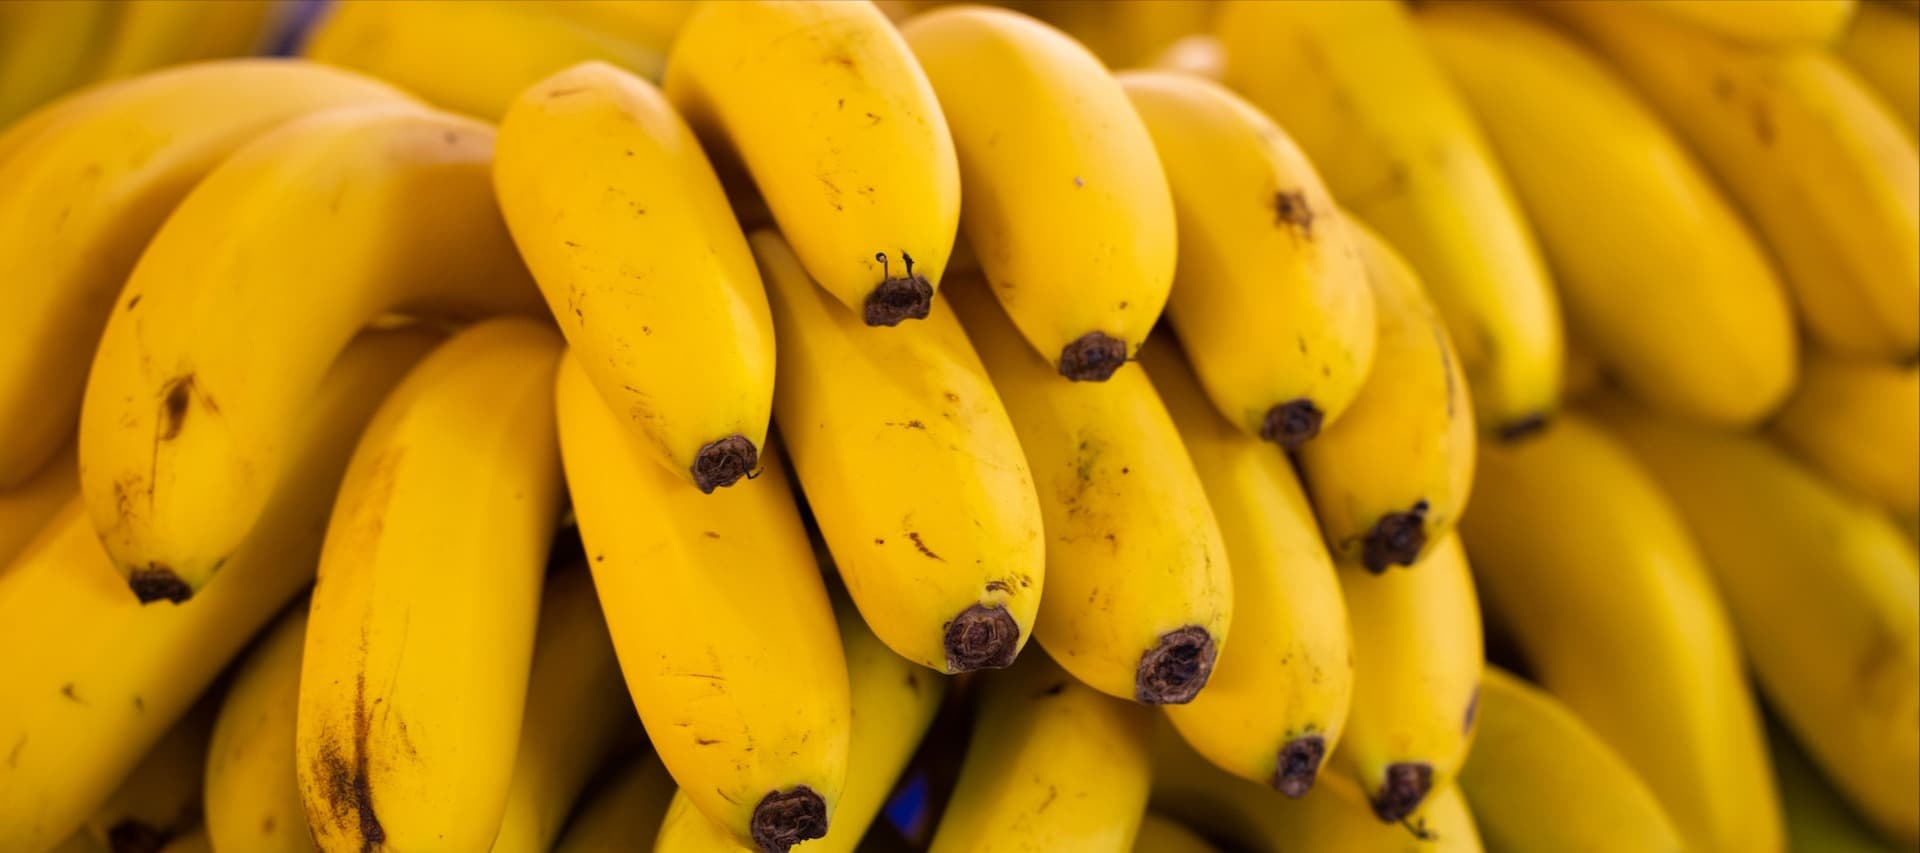 Фото новости: "Импортеров бананов предупредили о проблемах из-за беспорядков в Эквадоре"